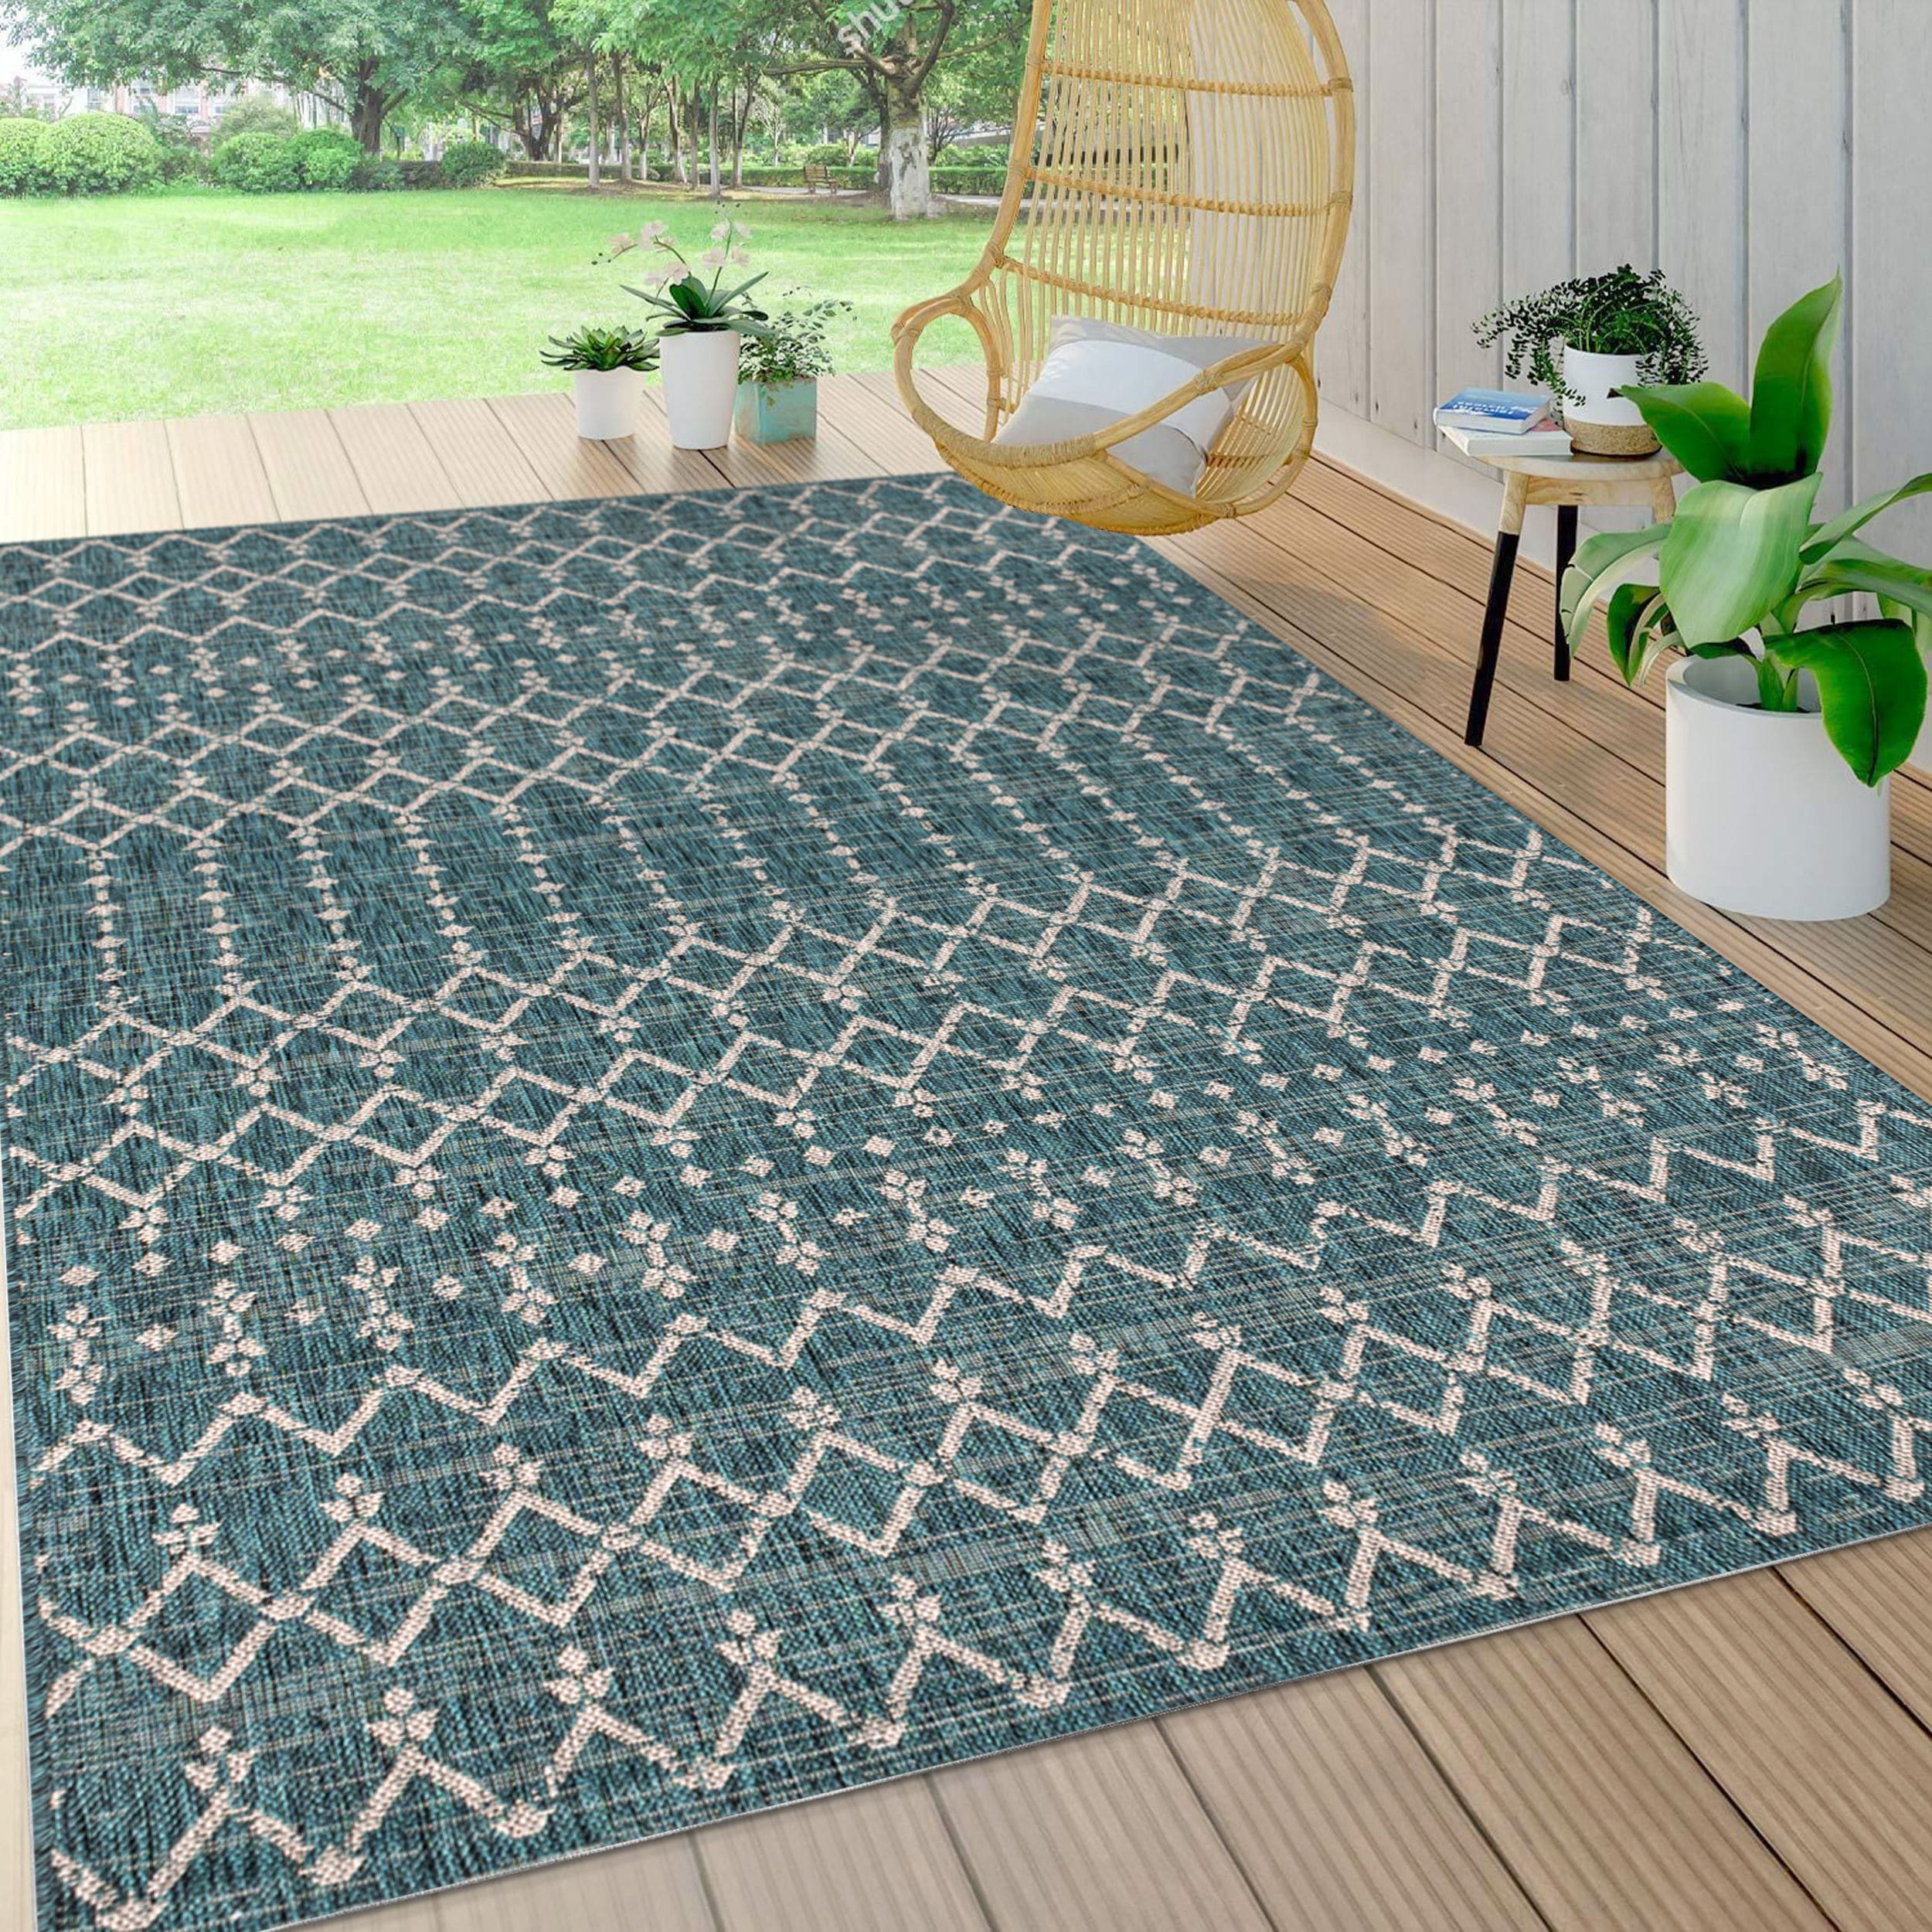 Patio Deck Porch Carpet Palm Indoor Outdoor Area Rug 8 x 10 feet Home Decor Gift 